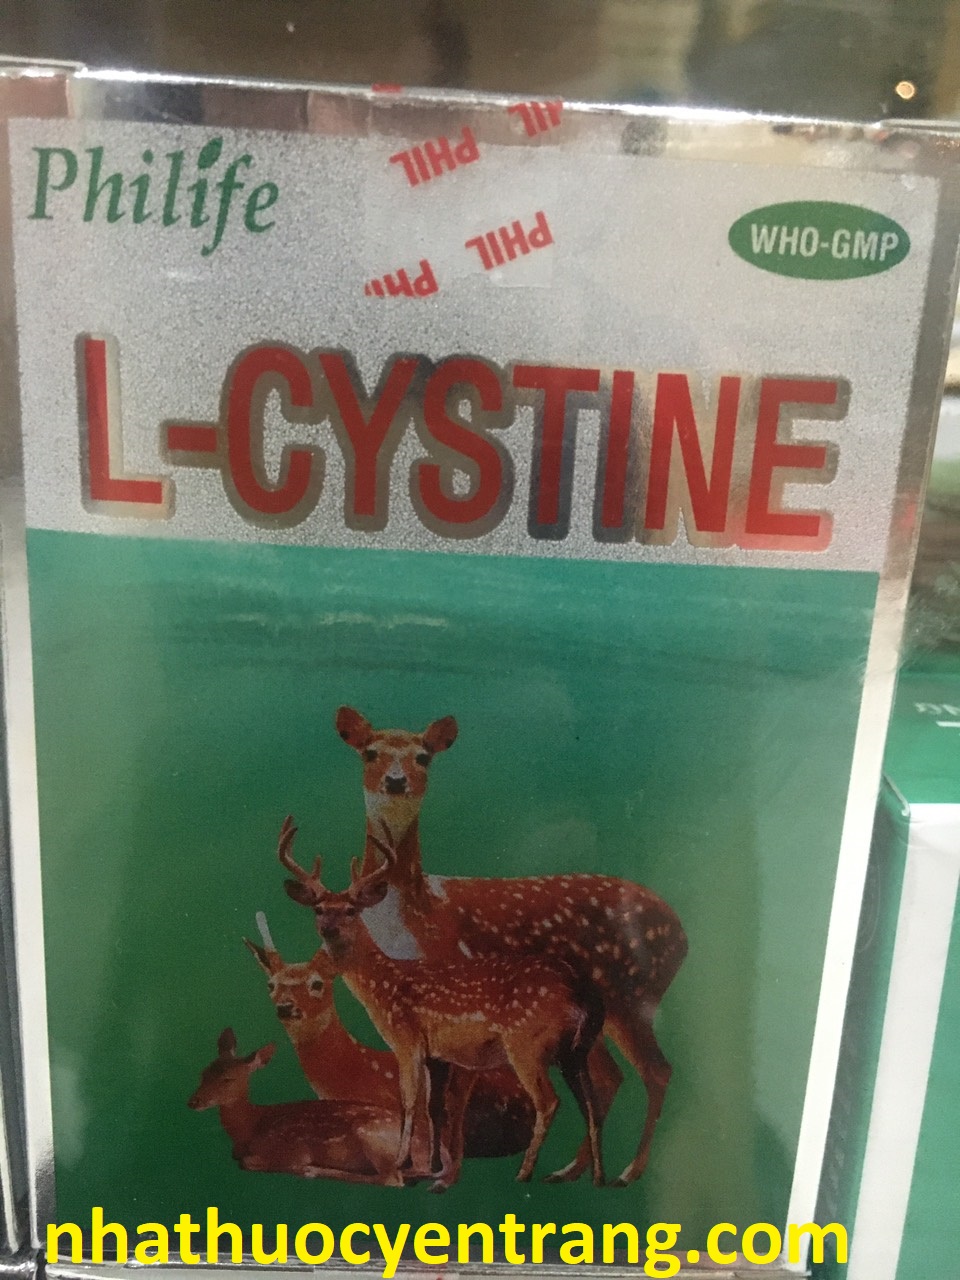 L-CYSTINE PHILIFE